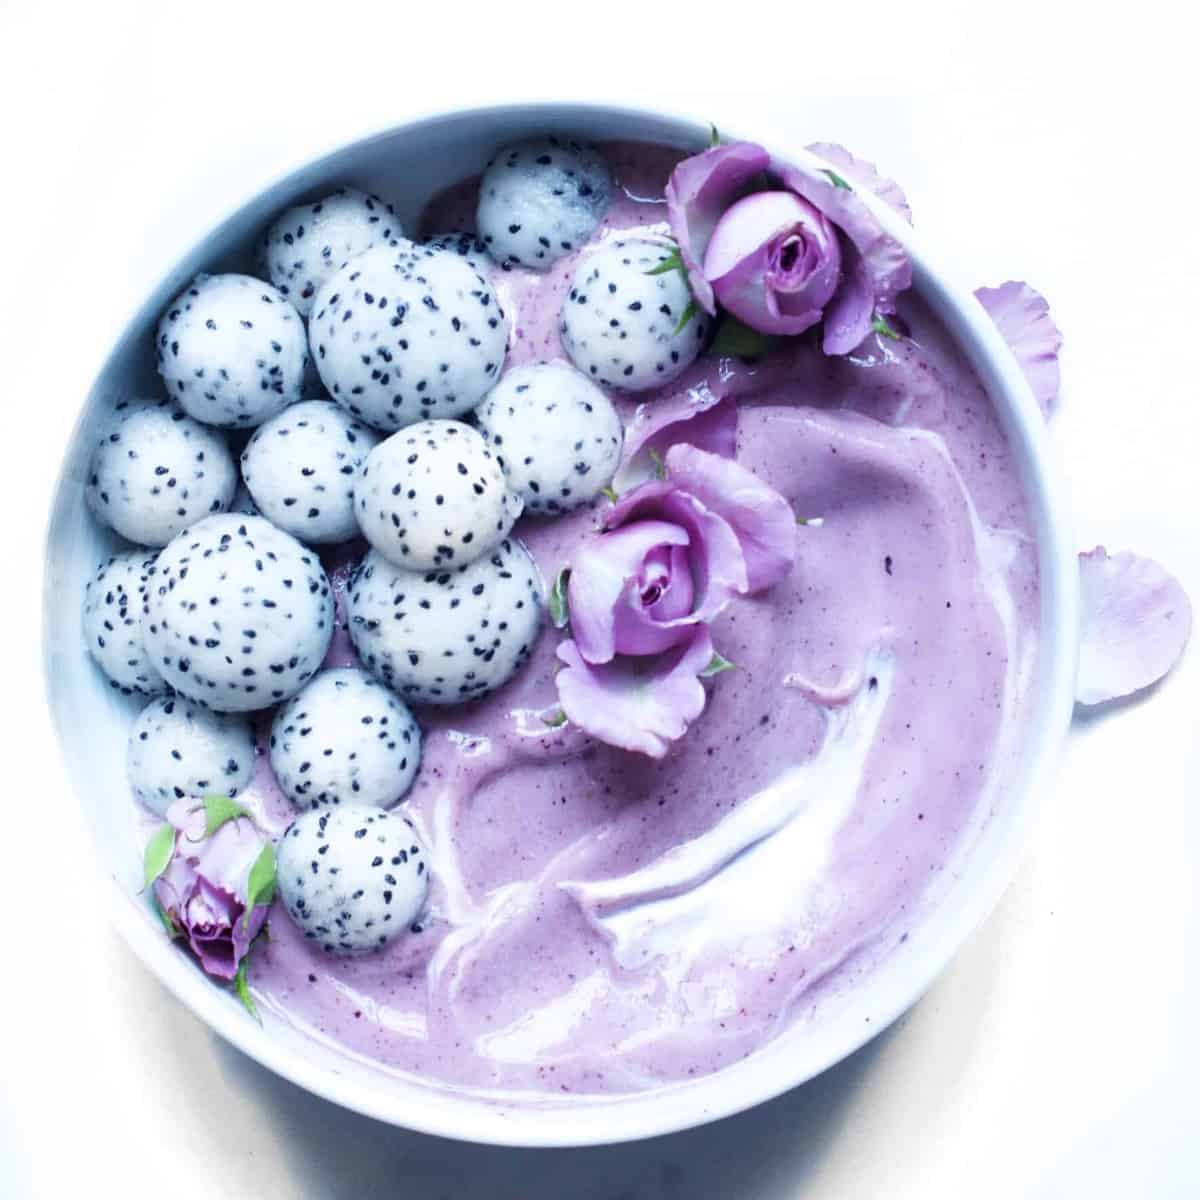 blueberry and acai smoothie bowl